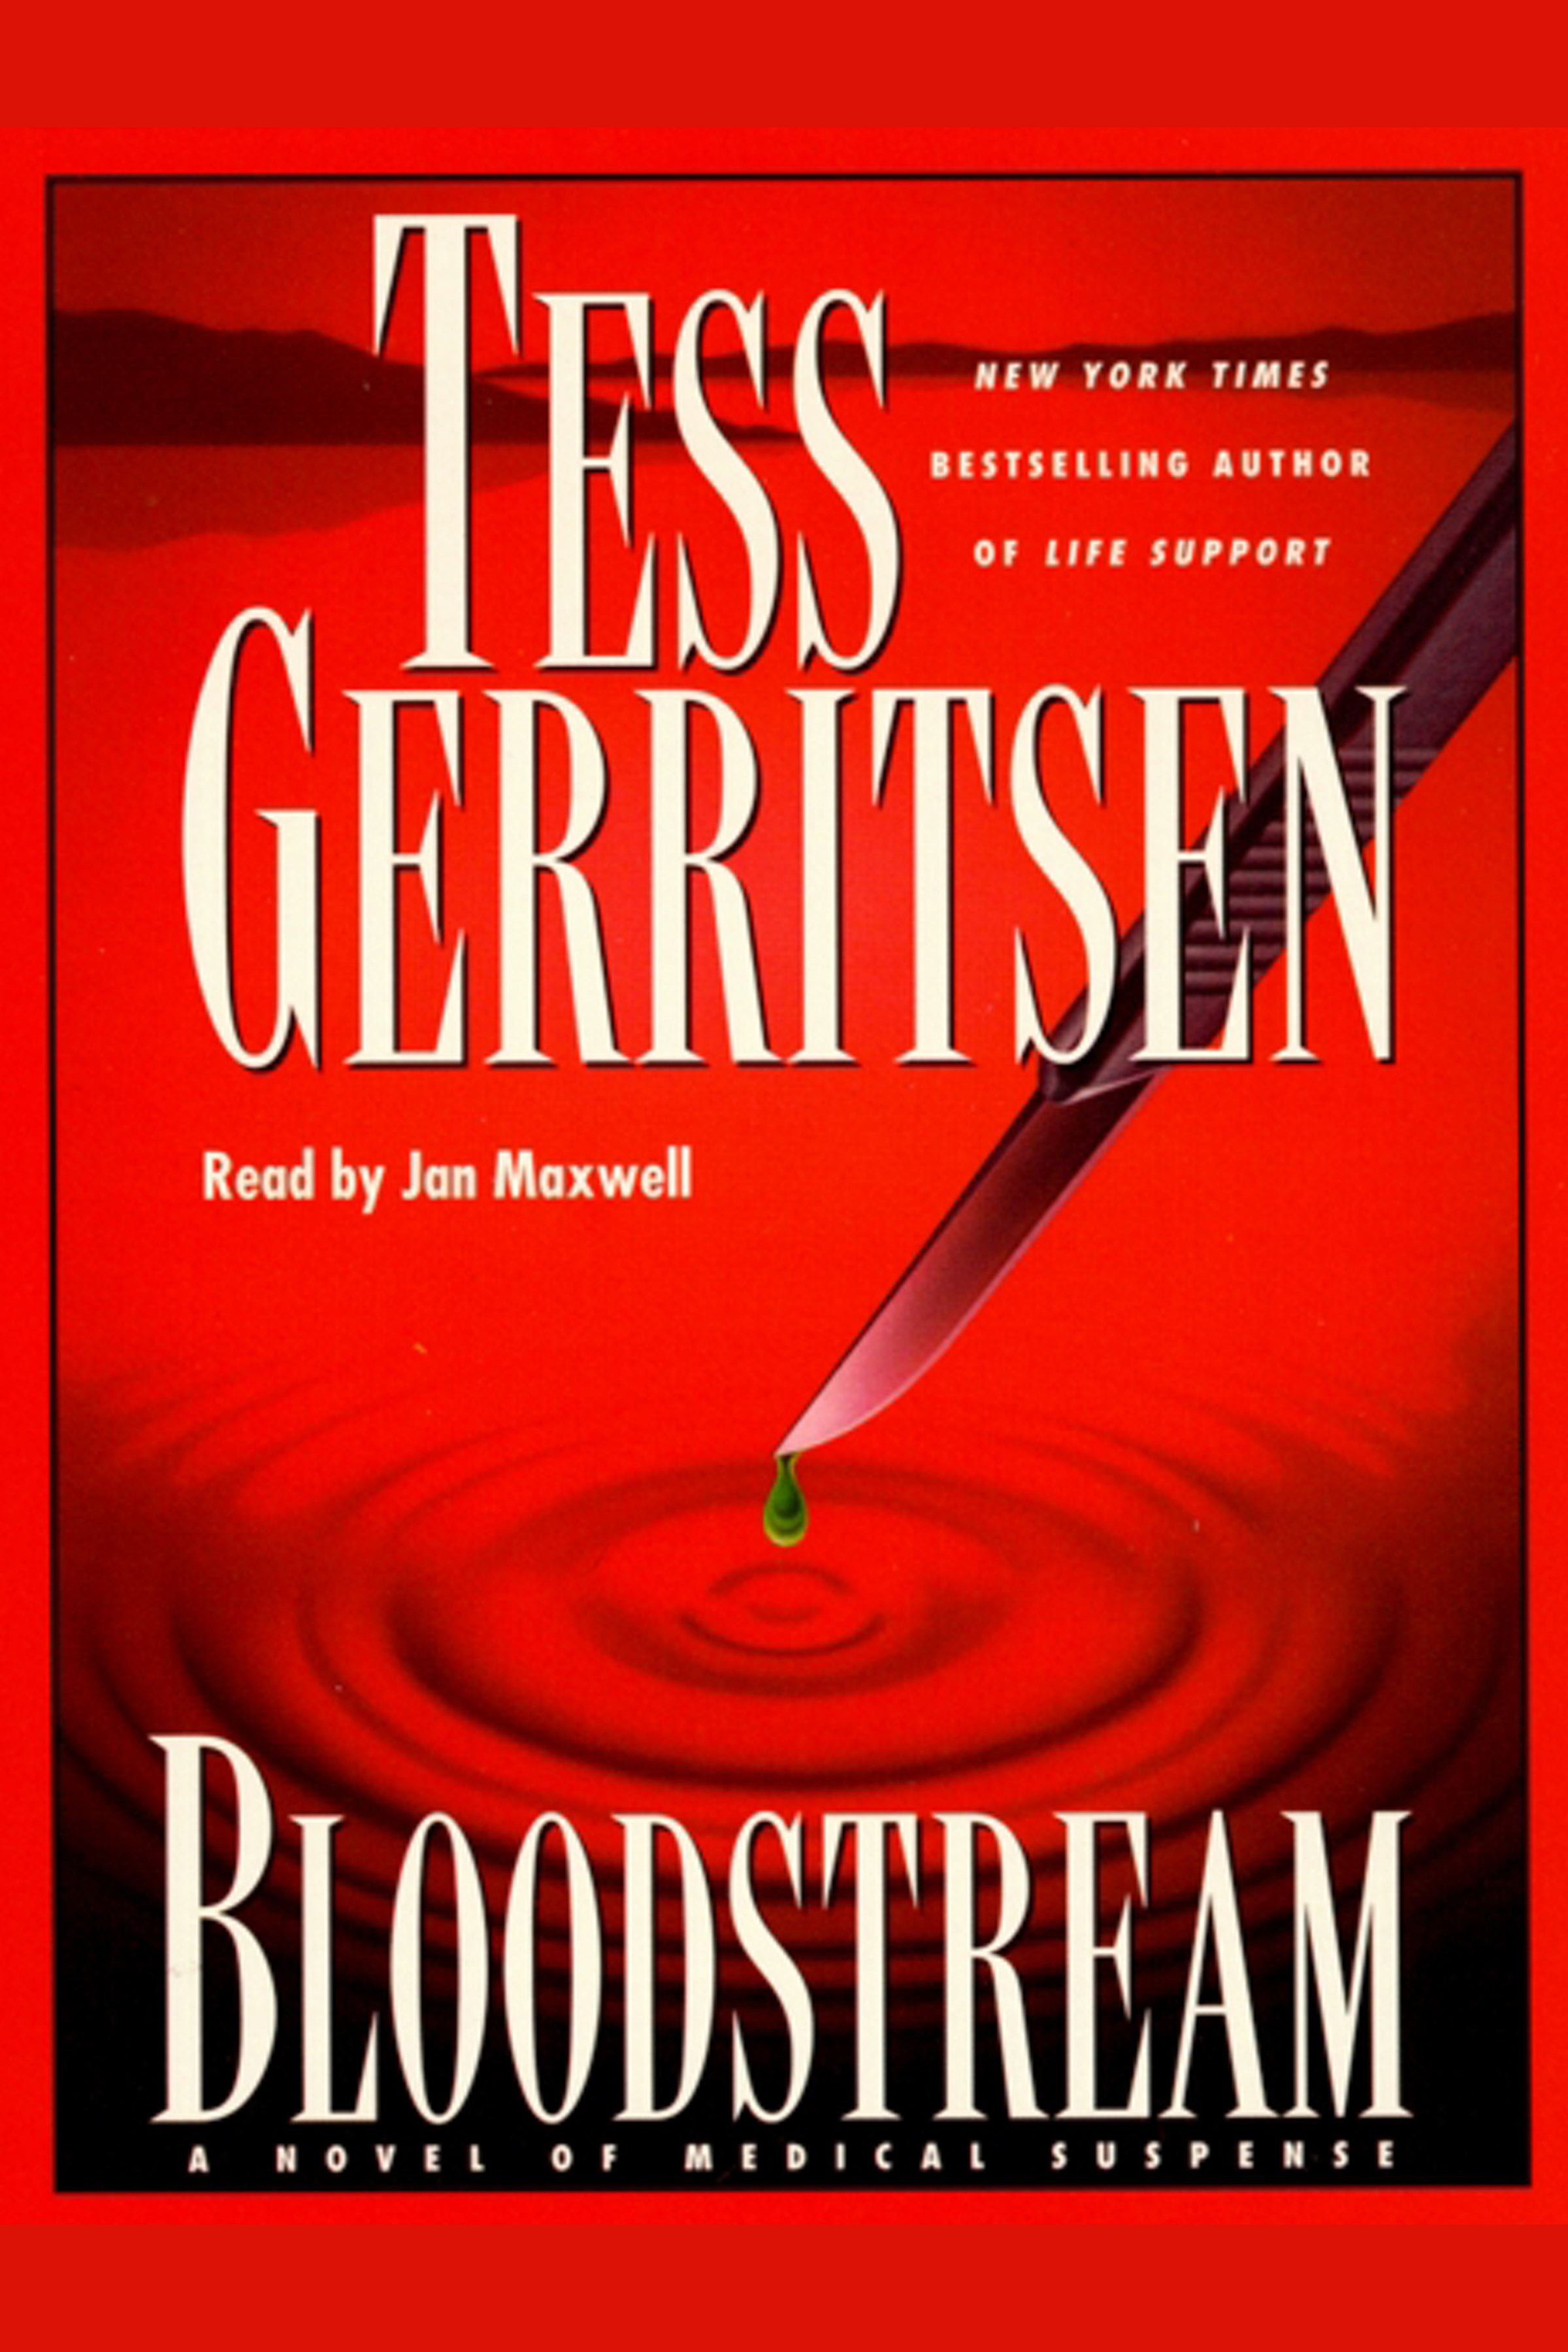 Bloodstream A Novel of Medical Suspense cover image